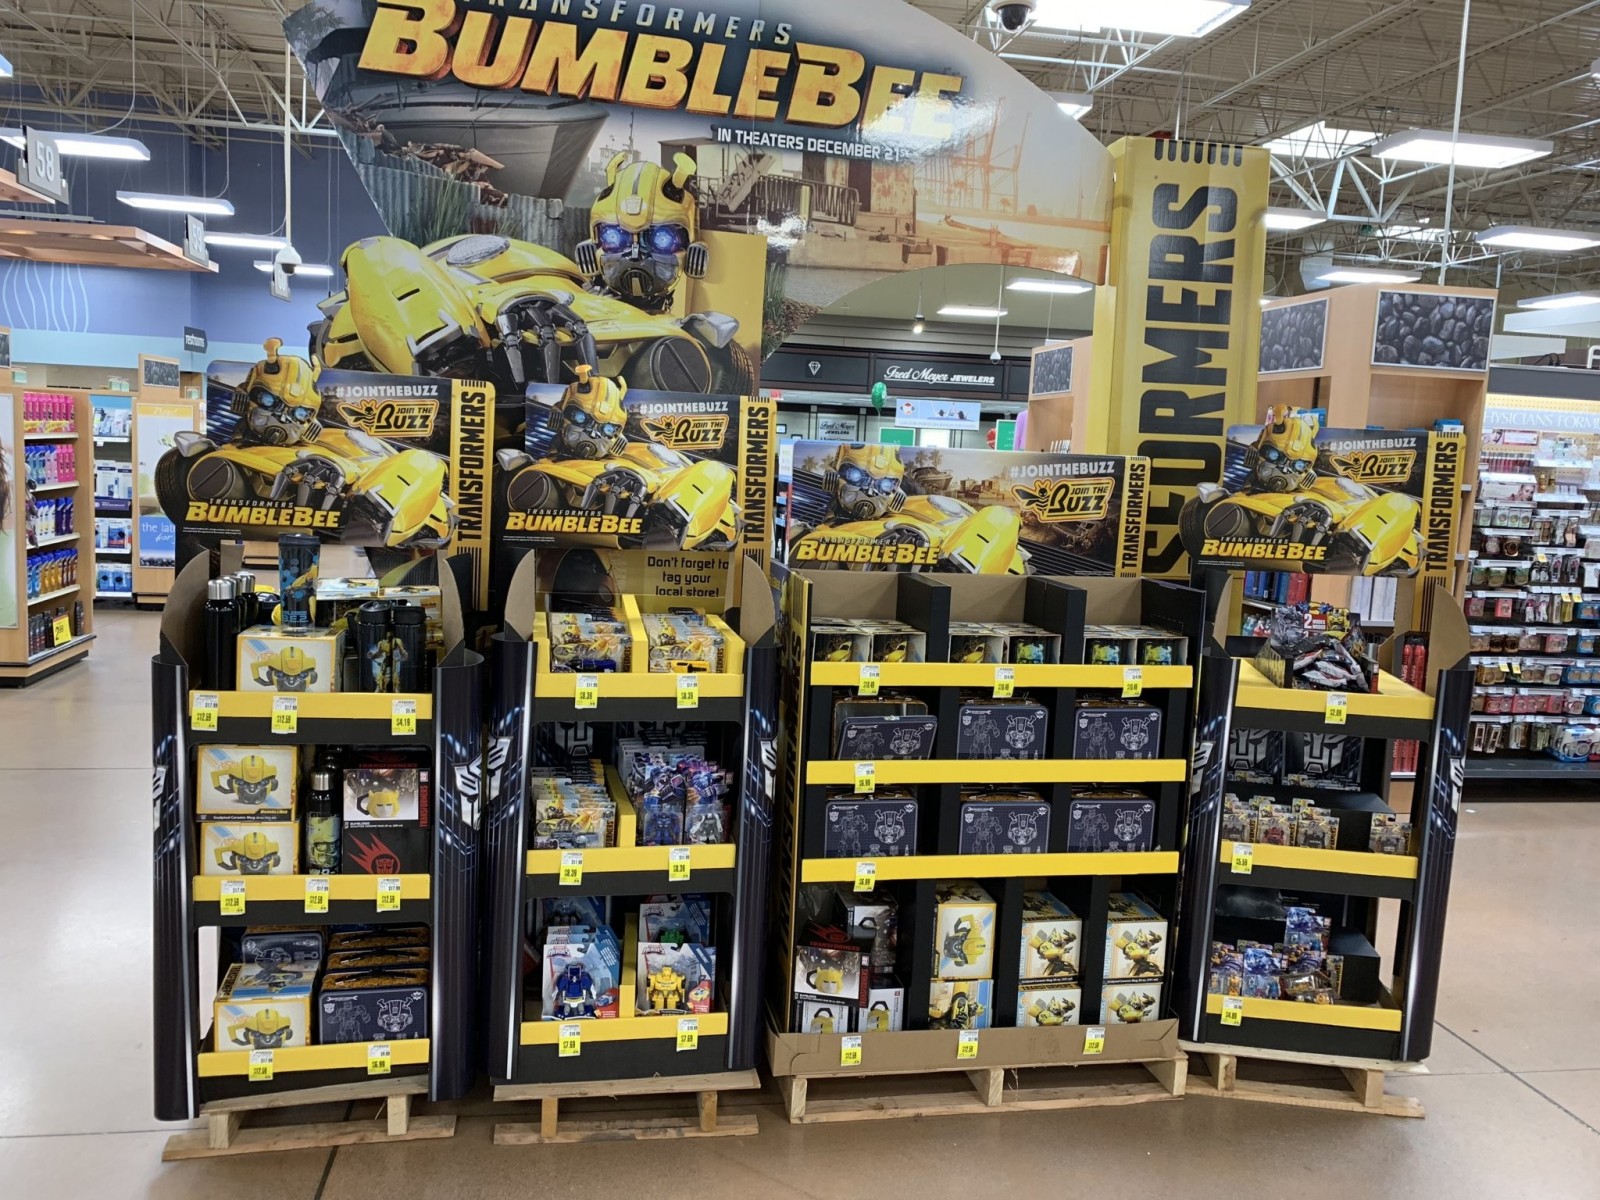 bumblebee transformer merchandise